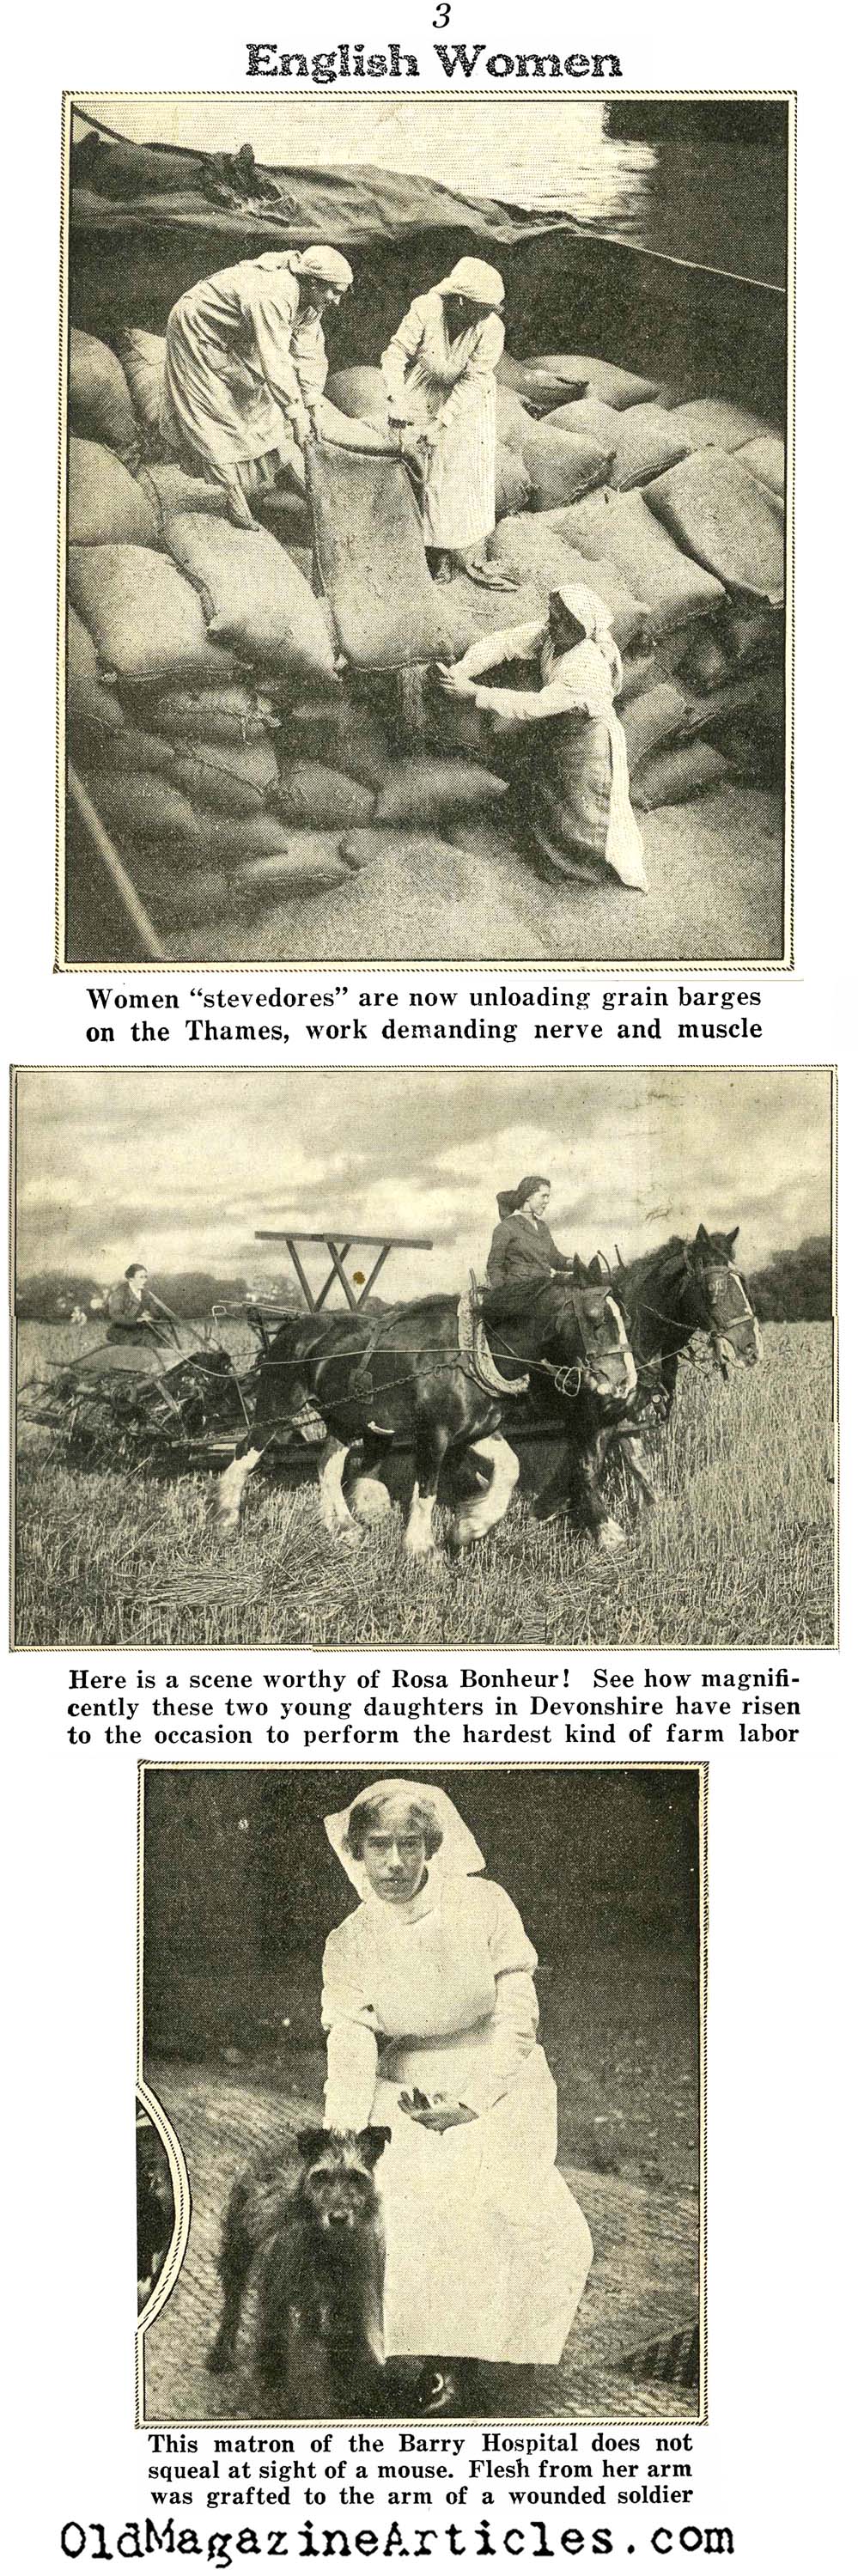 W.W. I and British Women (Collier's Magazine, 1916)